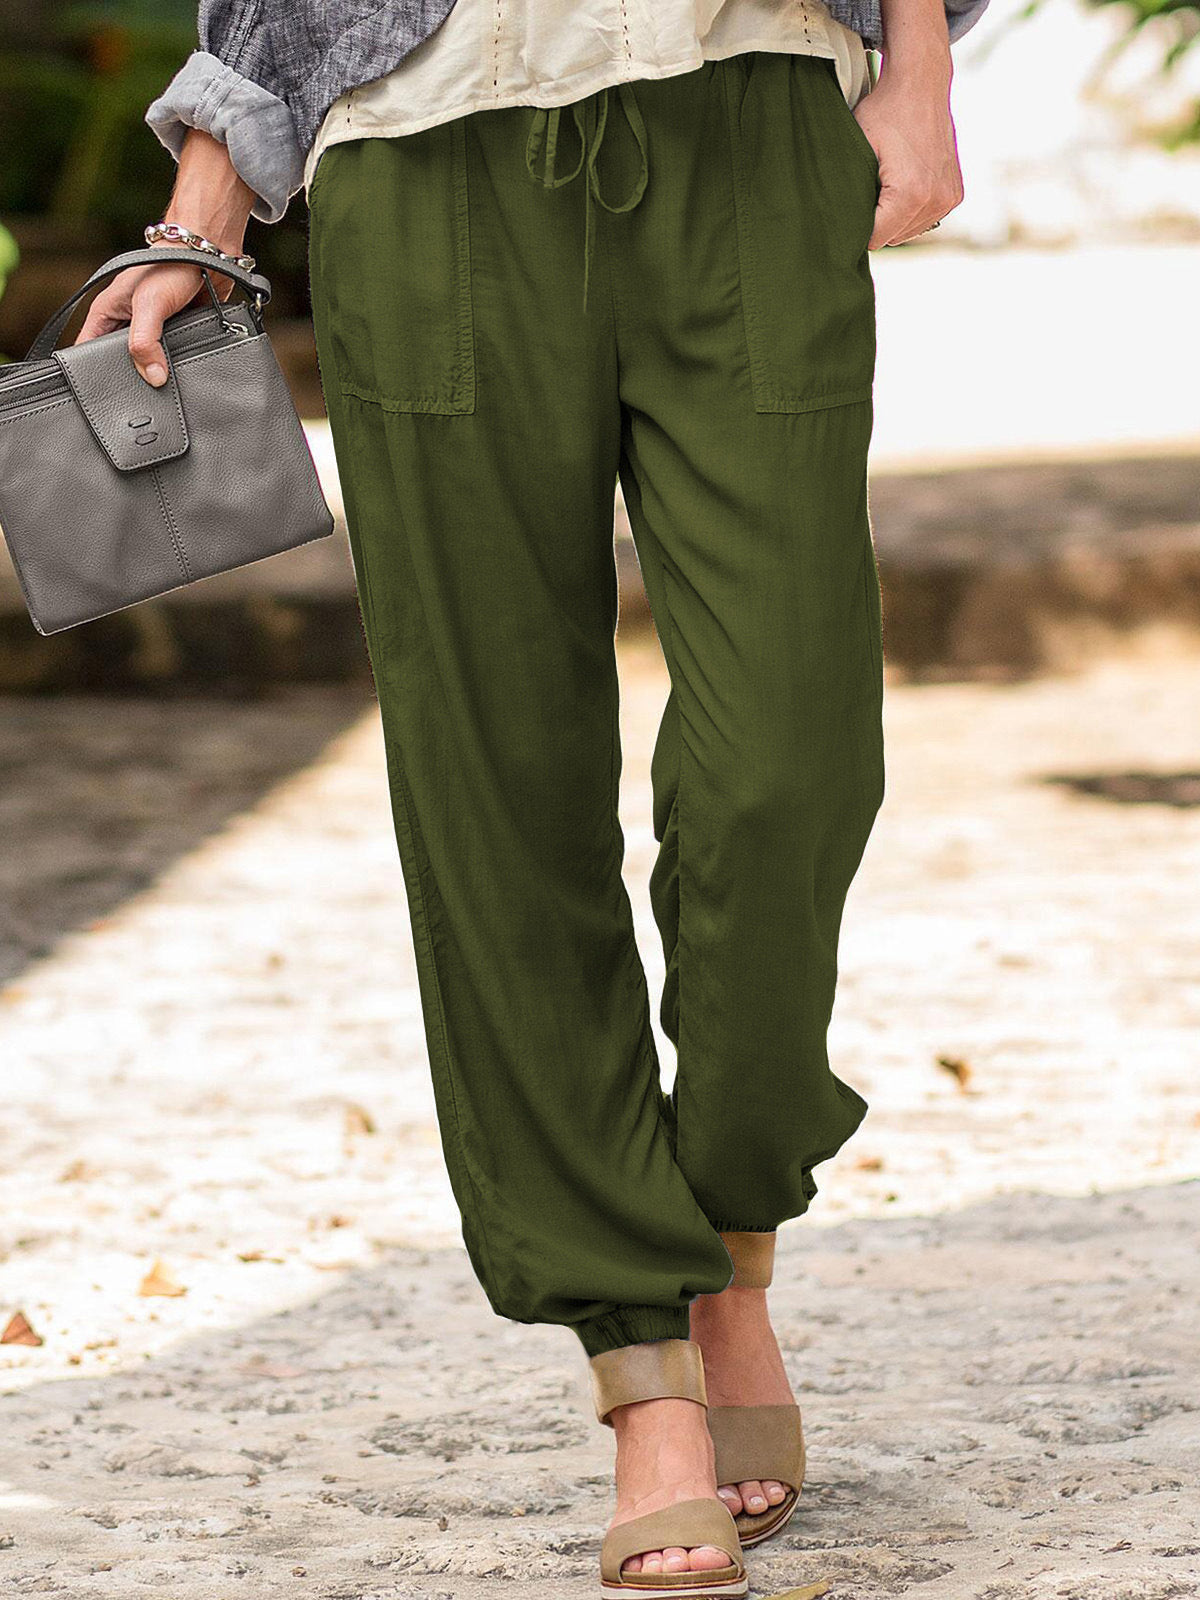 Women's Lace-up Trousers Solid Color Elastic Pocket Pants